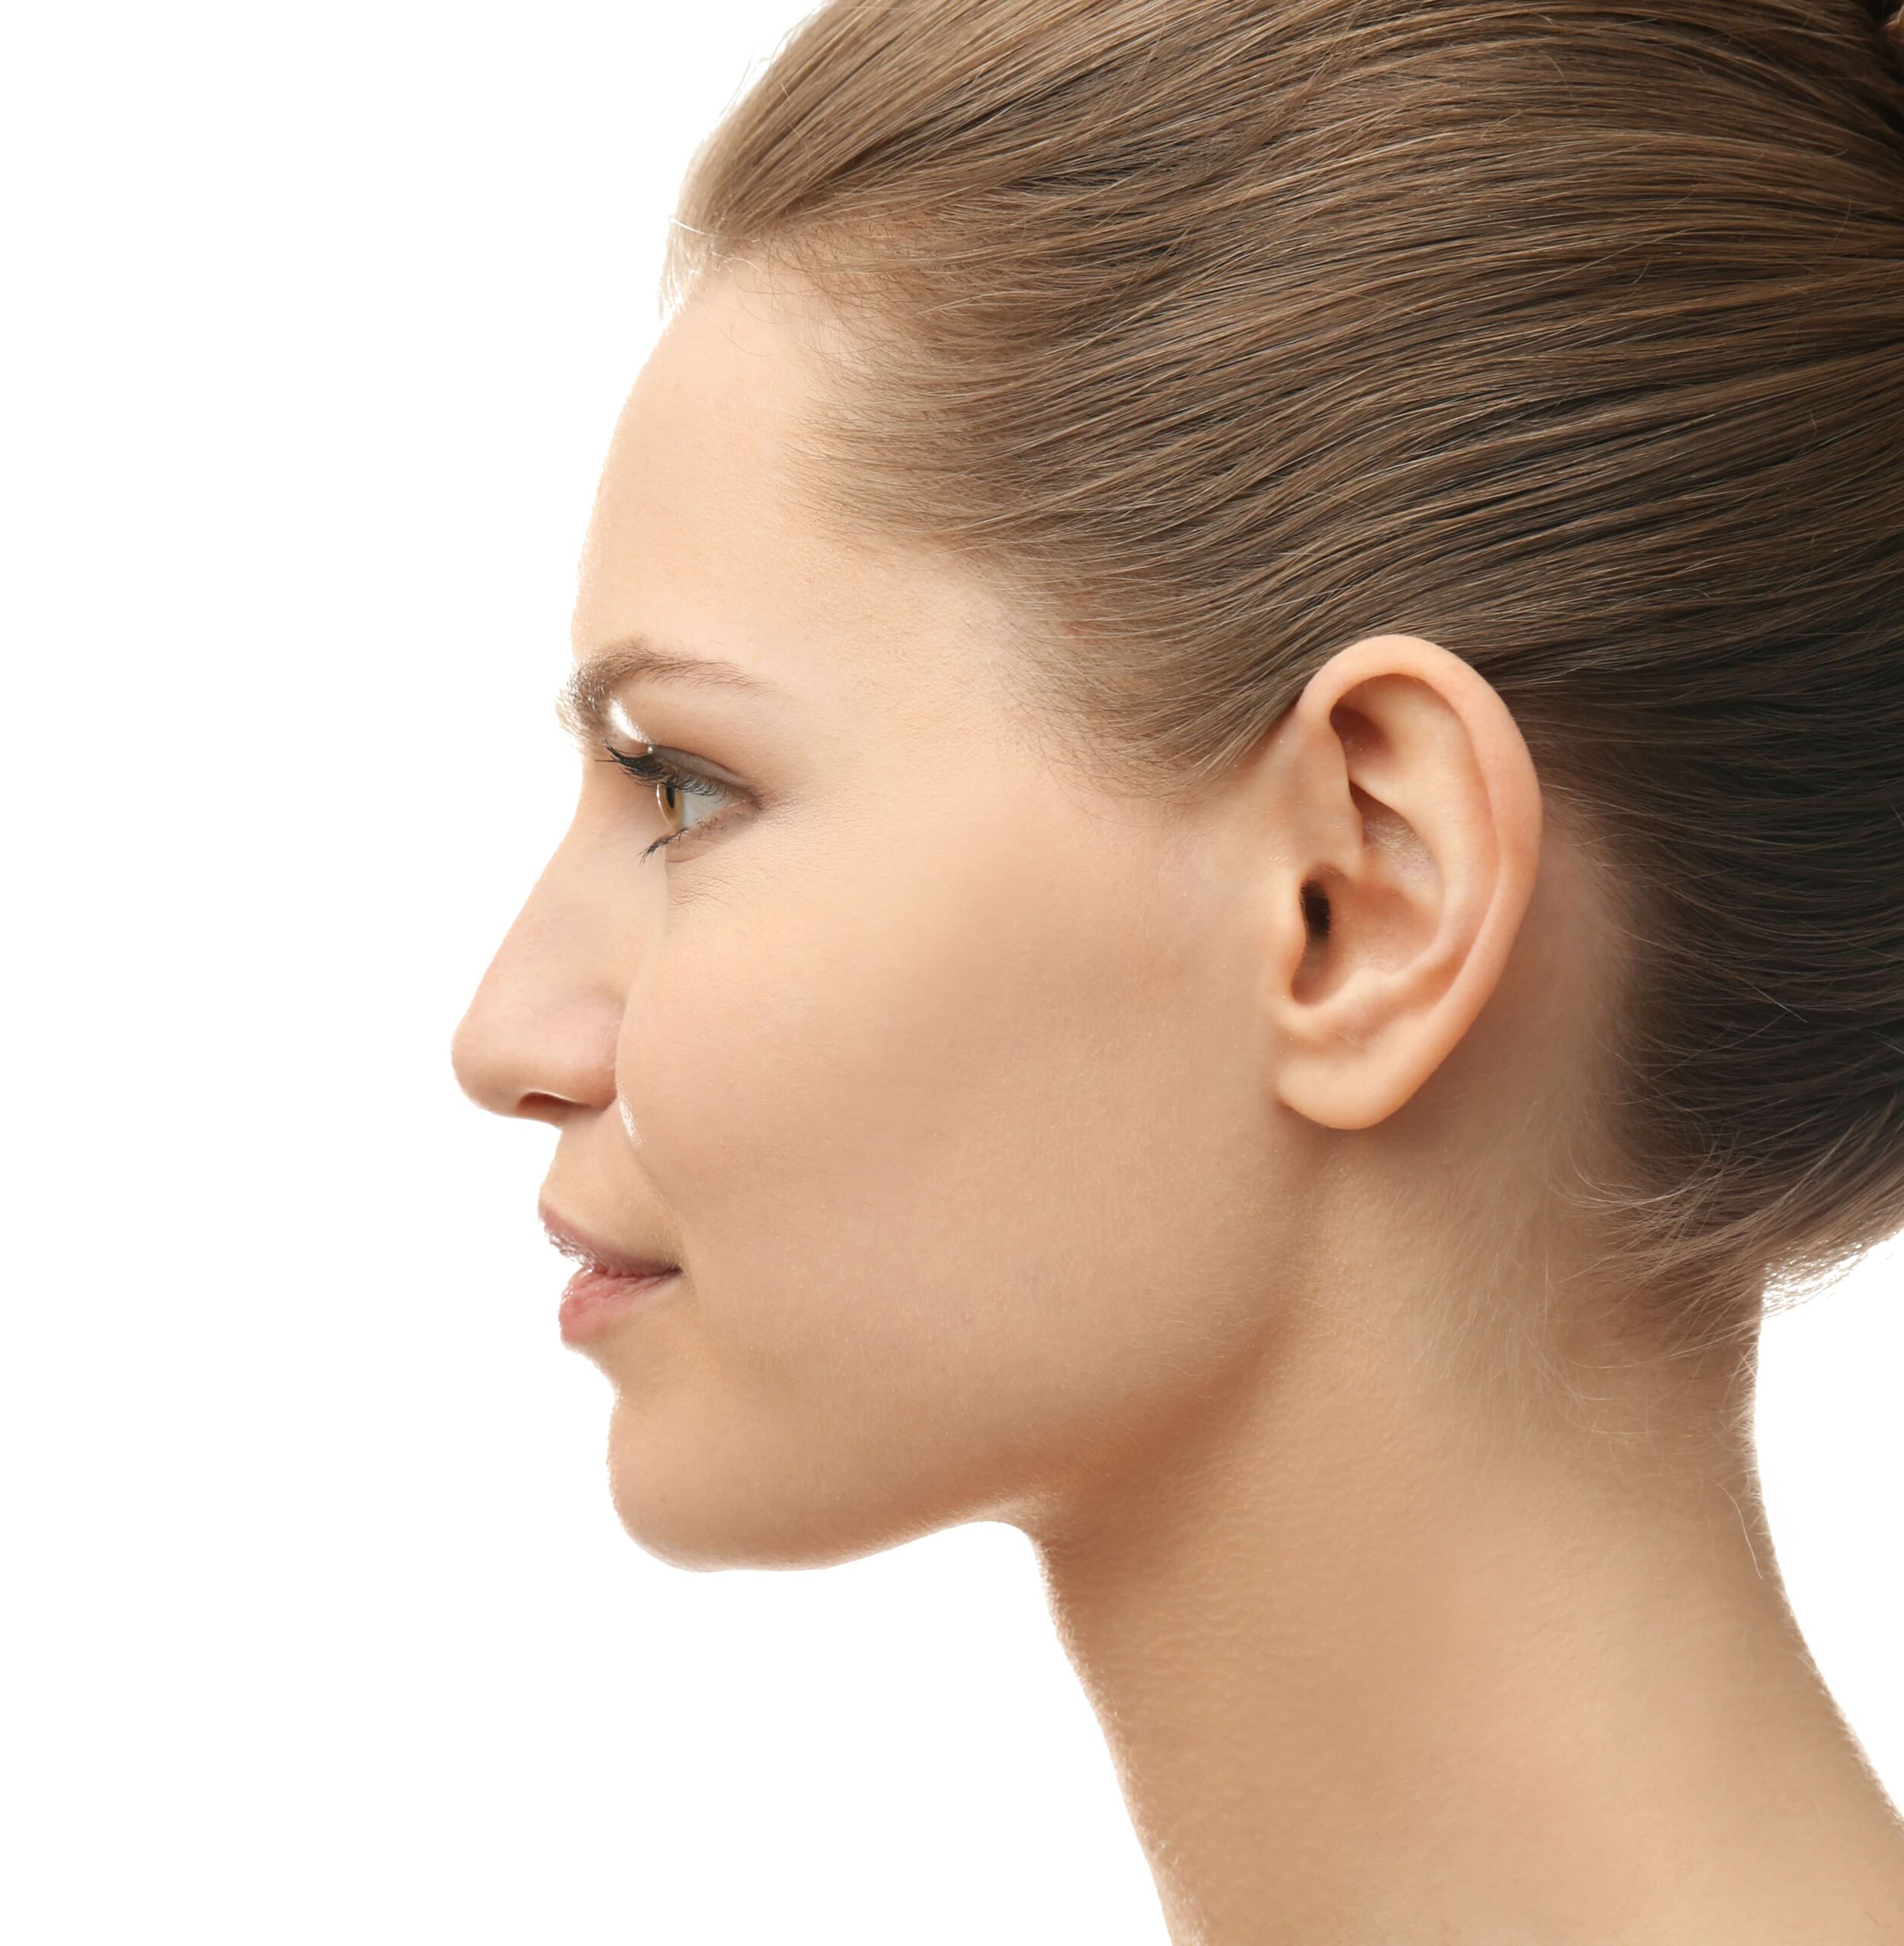 Otoplasty (ear reshaping)